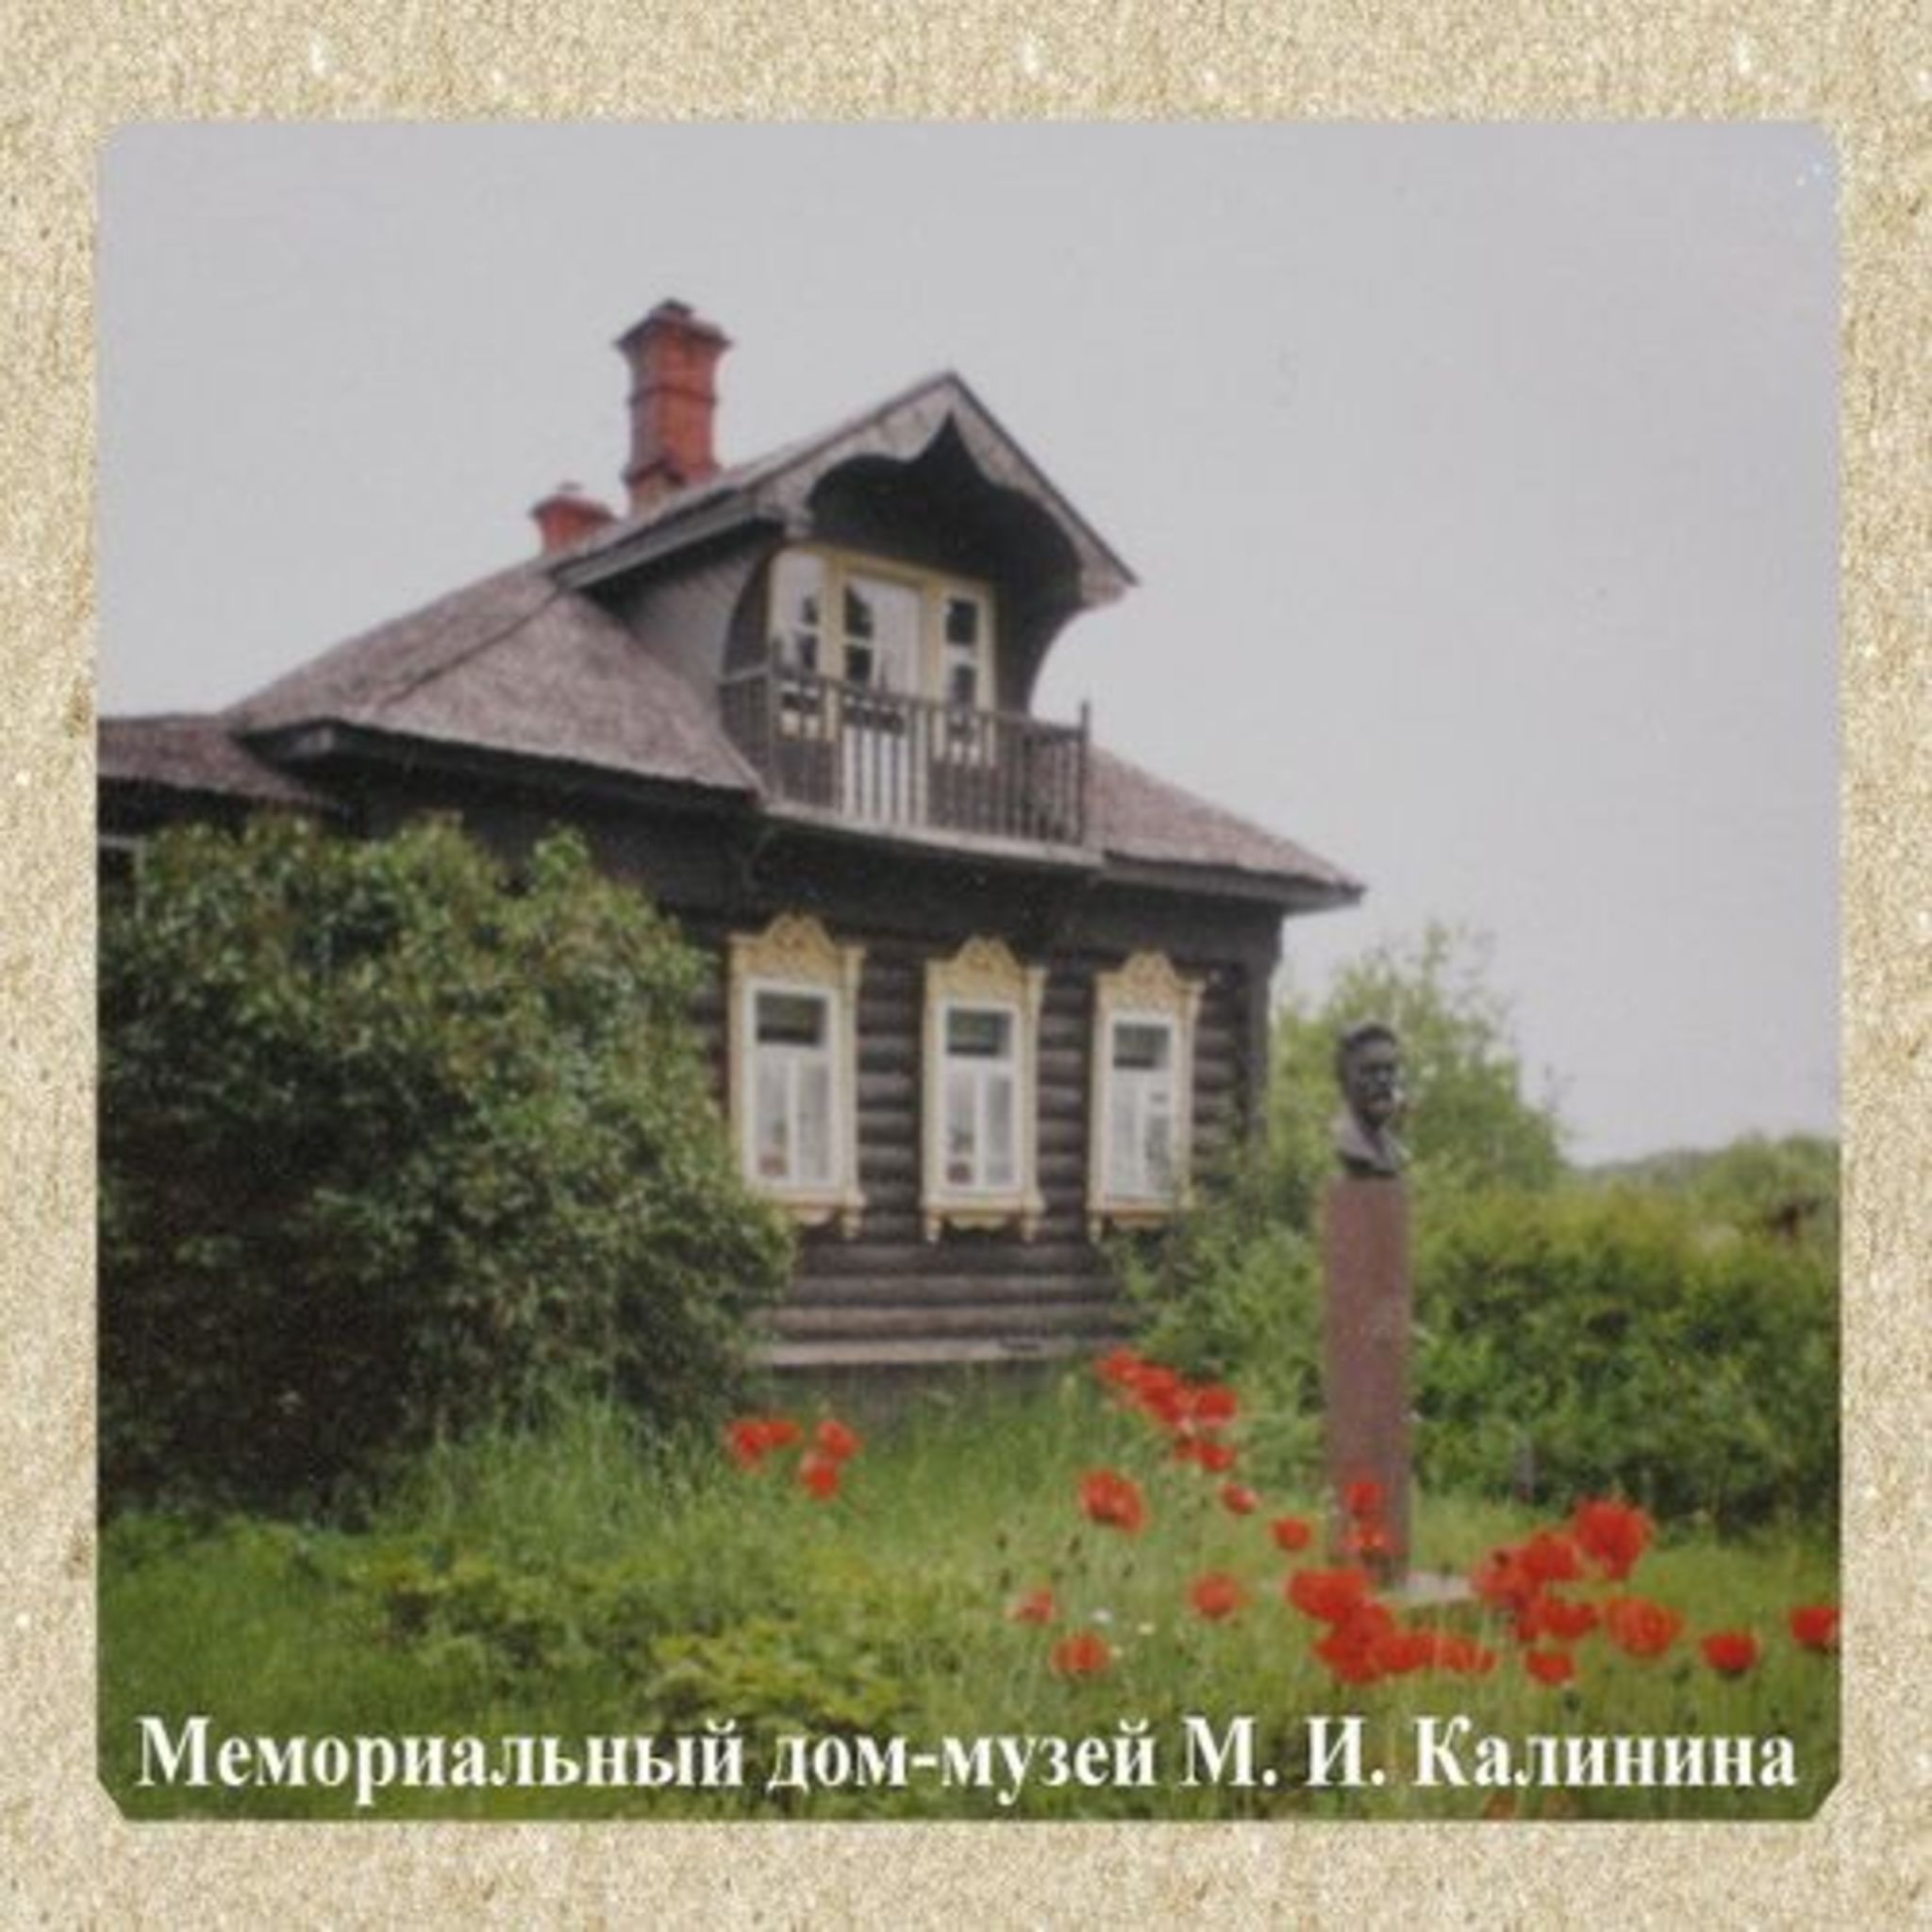 Memorial house-museum of Mikhail Kalinin